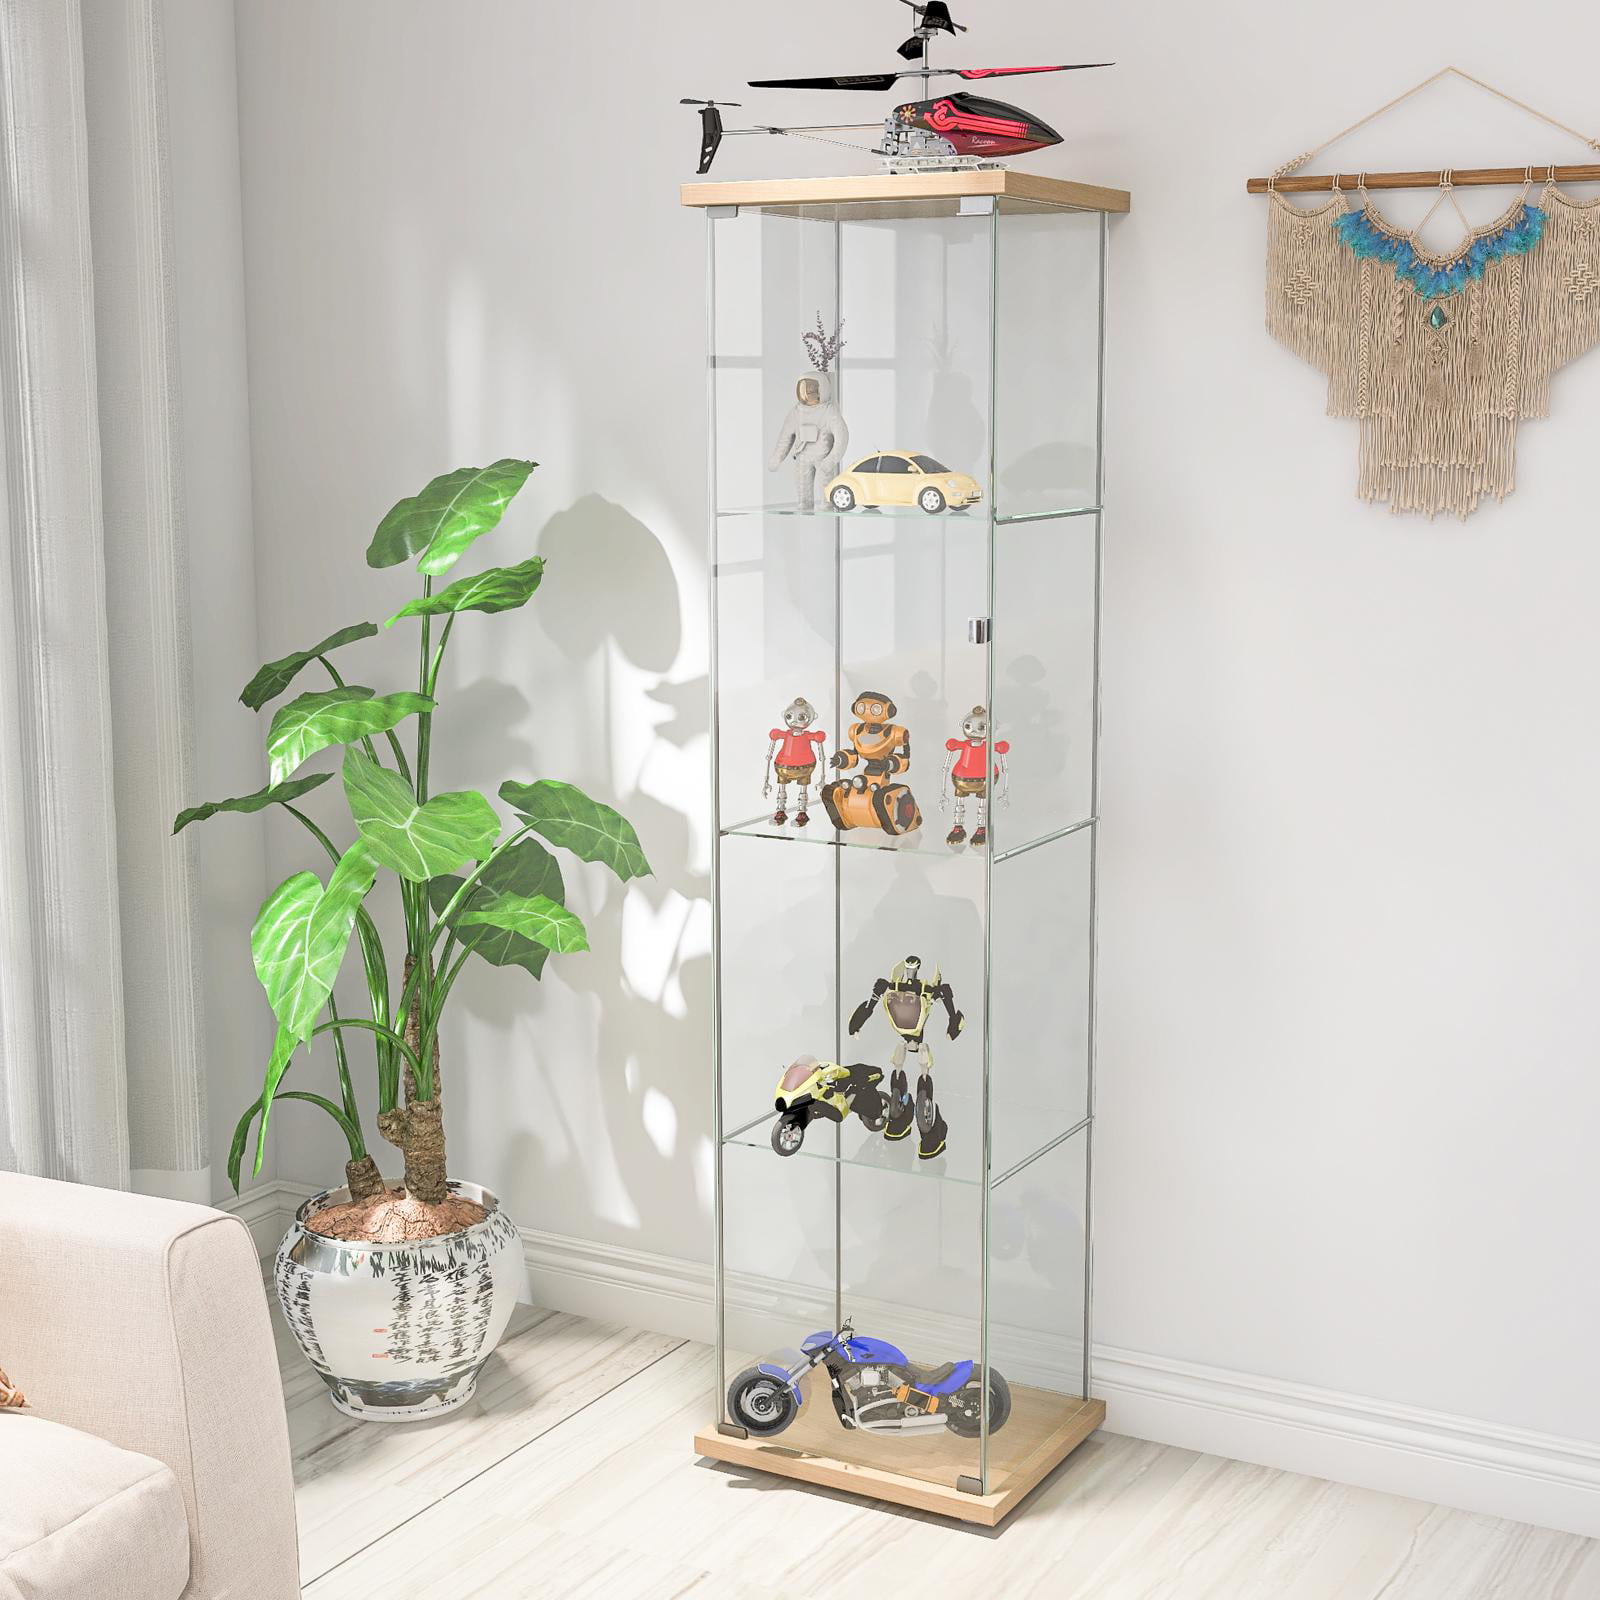 Glass Cabinet-b Glass Display Cabinet 4 Shelves with Door Black Floor Standing Curio Bookshelf in The Study for Living Room Bedroom Office 64” x 17”x 14.5”